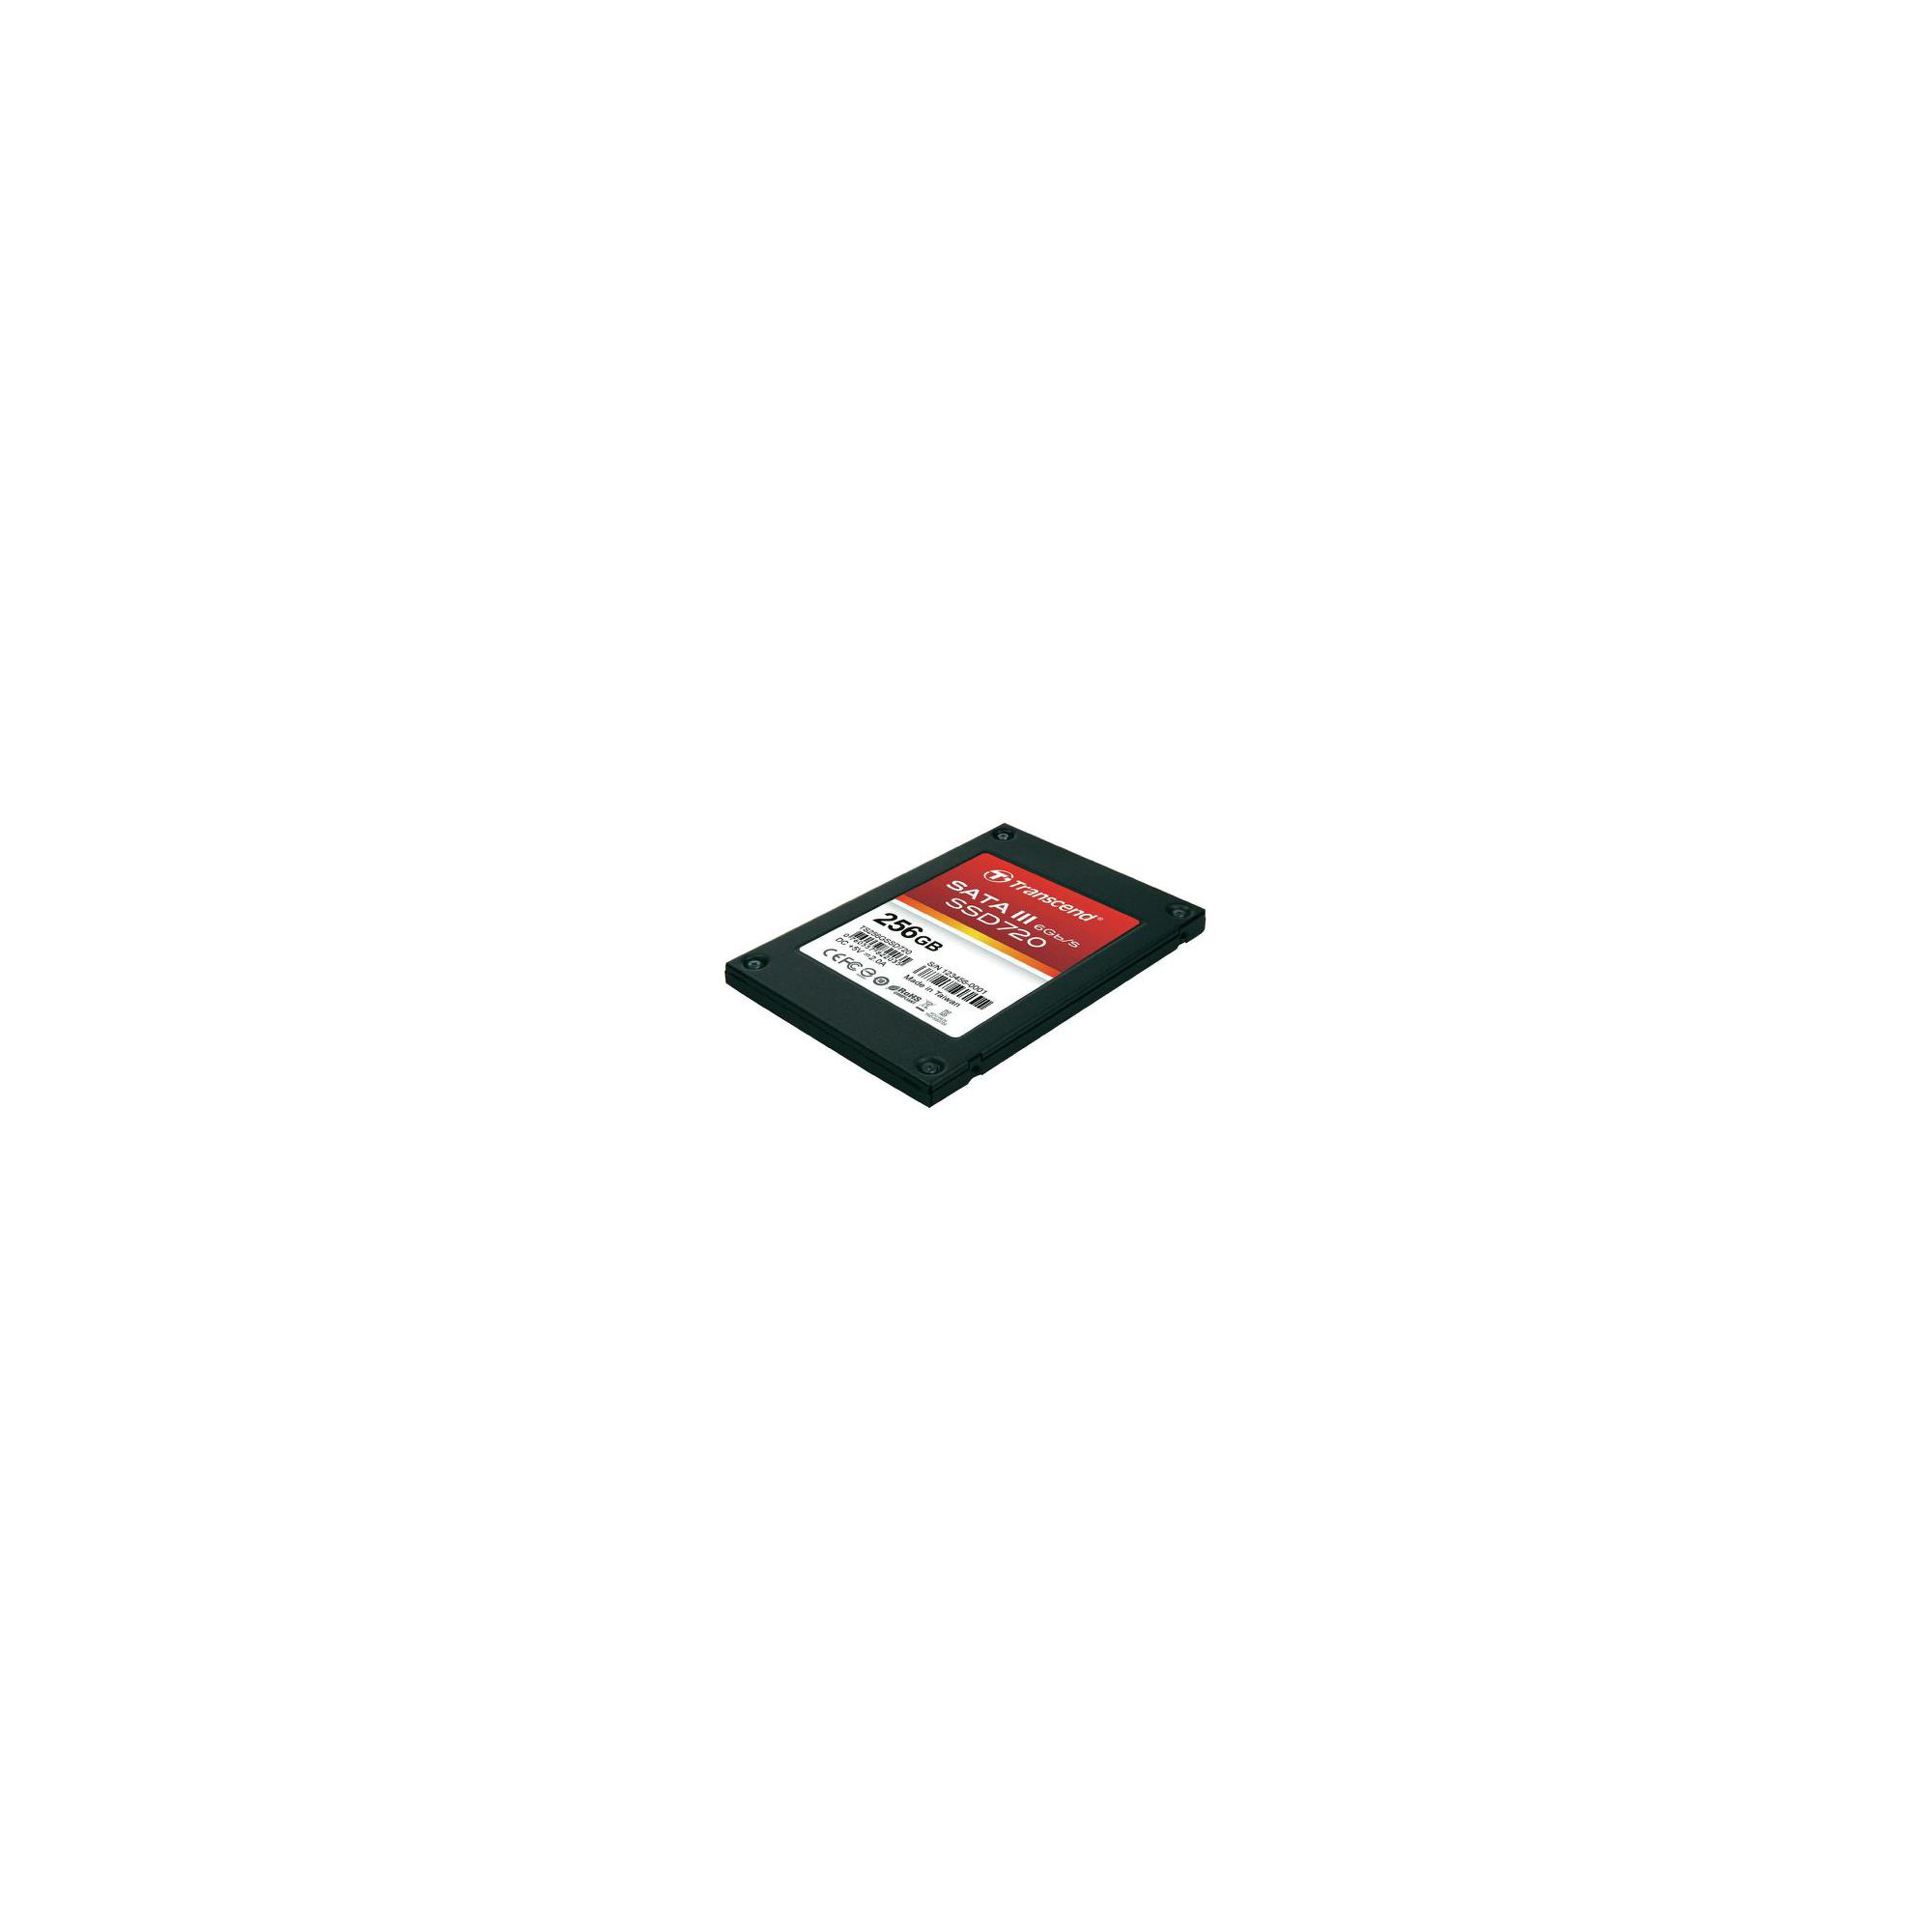 Transcend SSD720 (256GB) 2.5 inch SATA III 6Gb/s Ultra Slim Solid State Drive at Tesco Direct